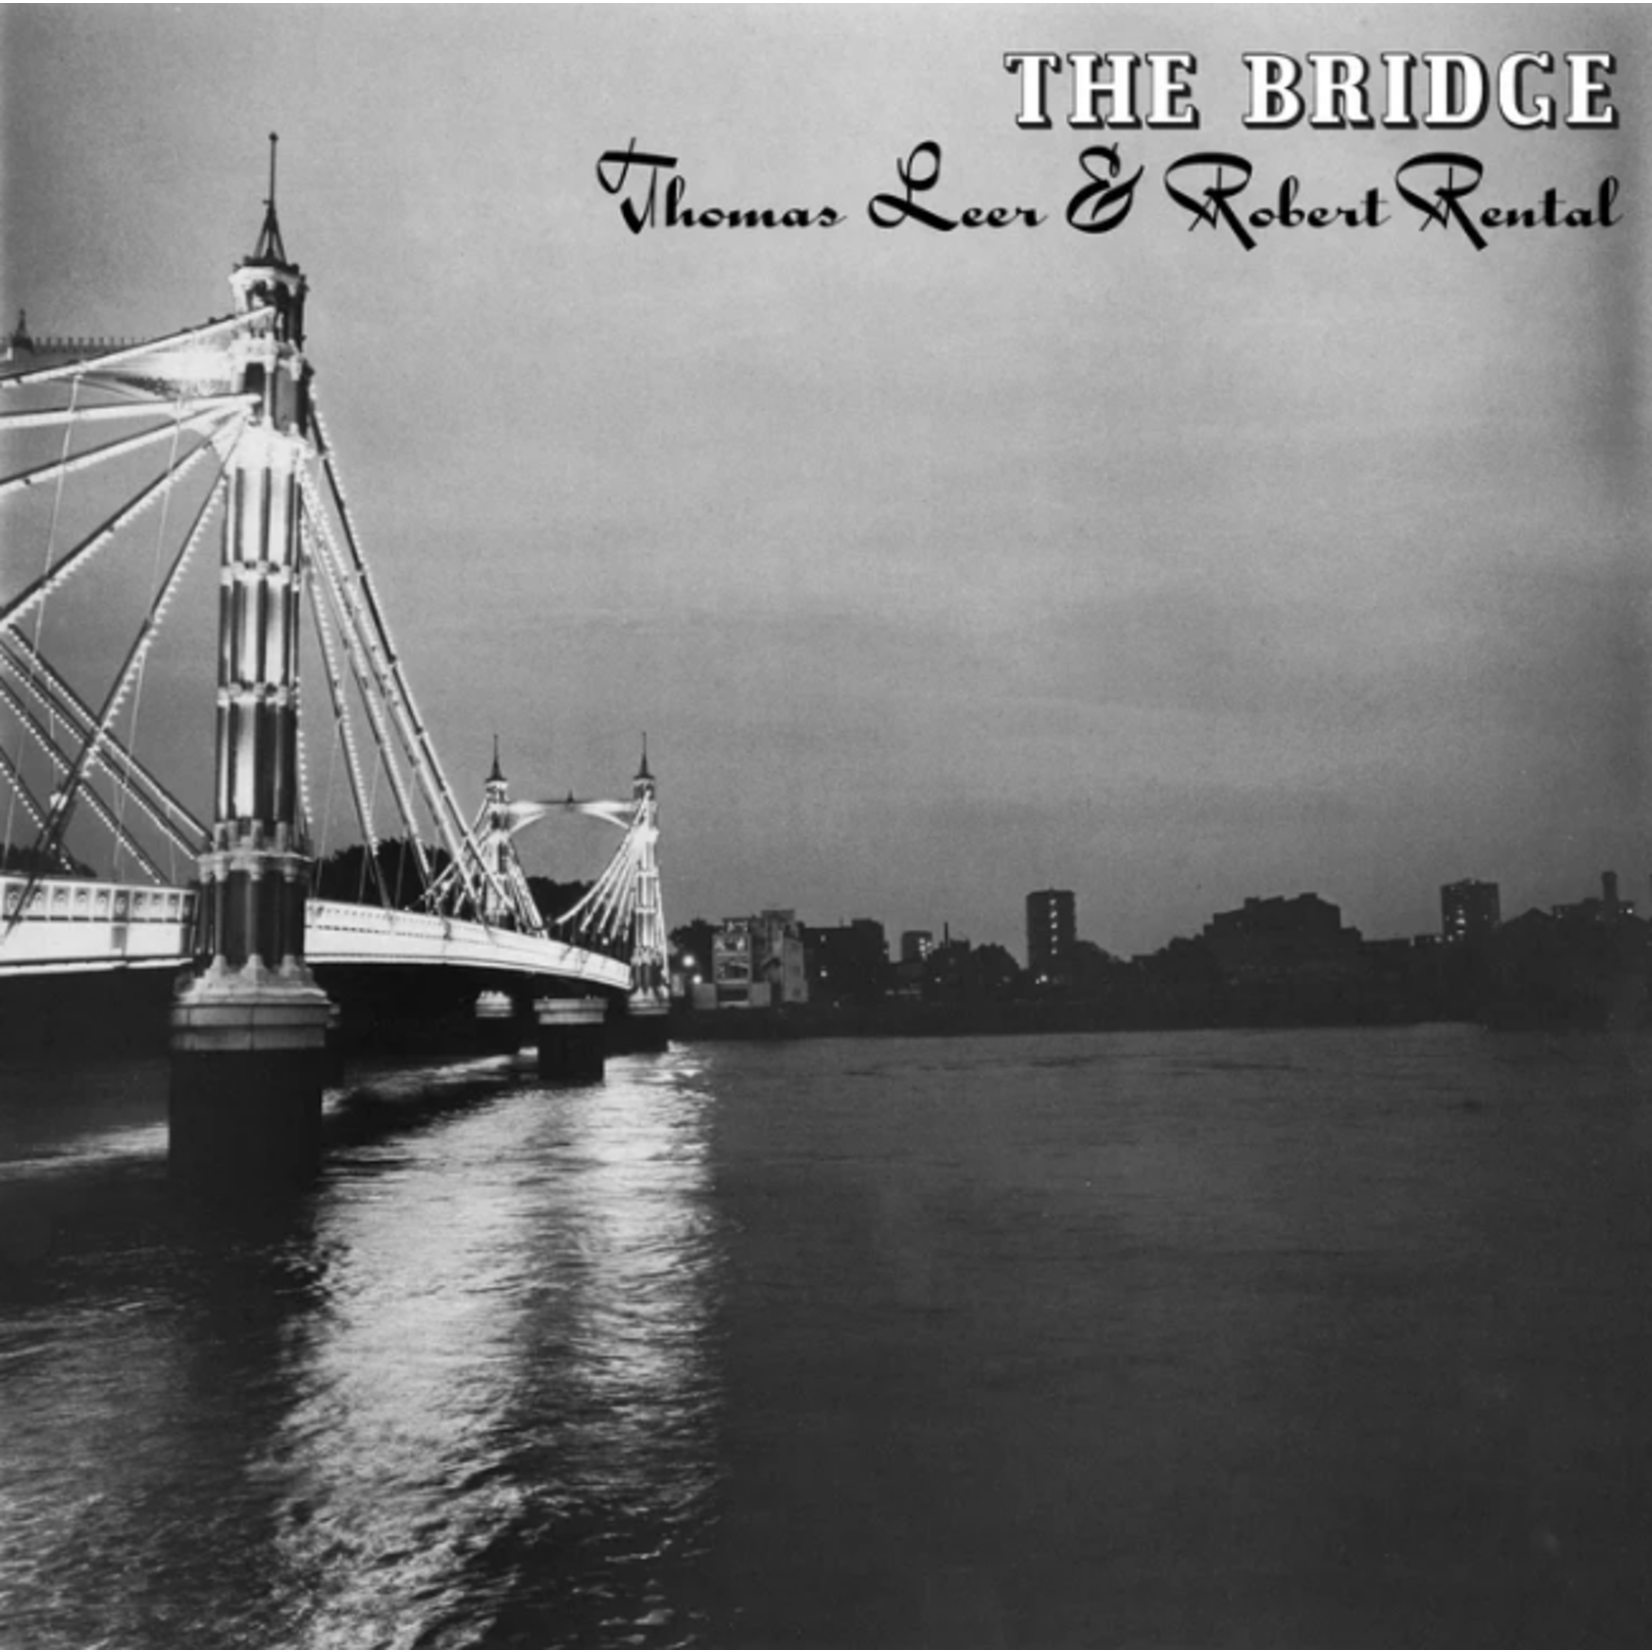 [New] Thomas Leer & Robert Rental - The Bridge (white)